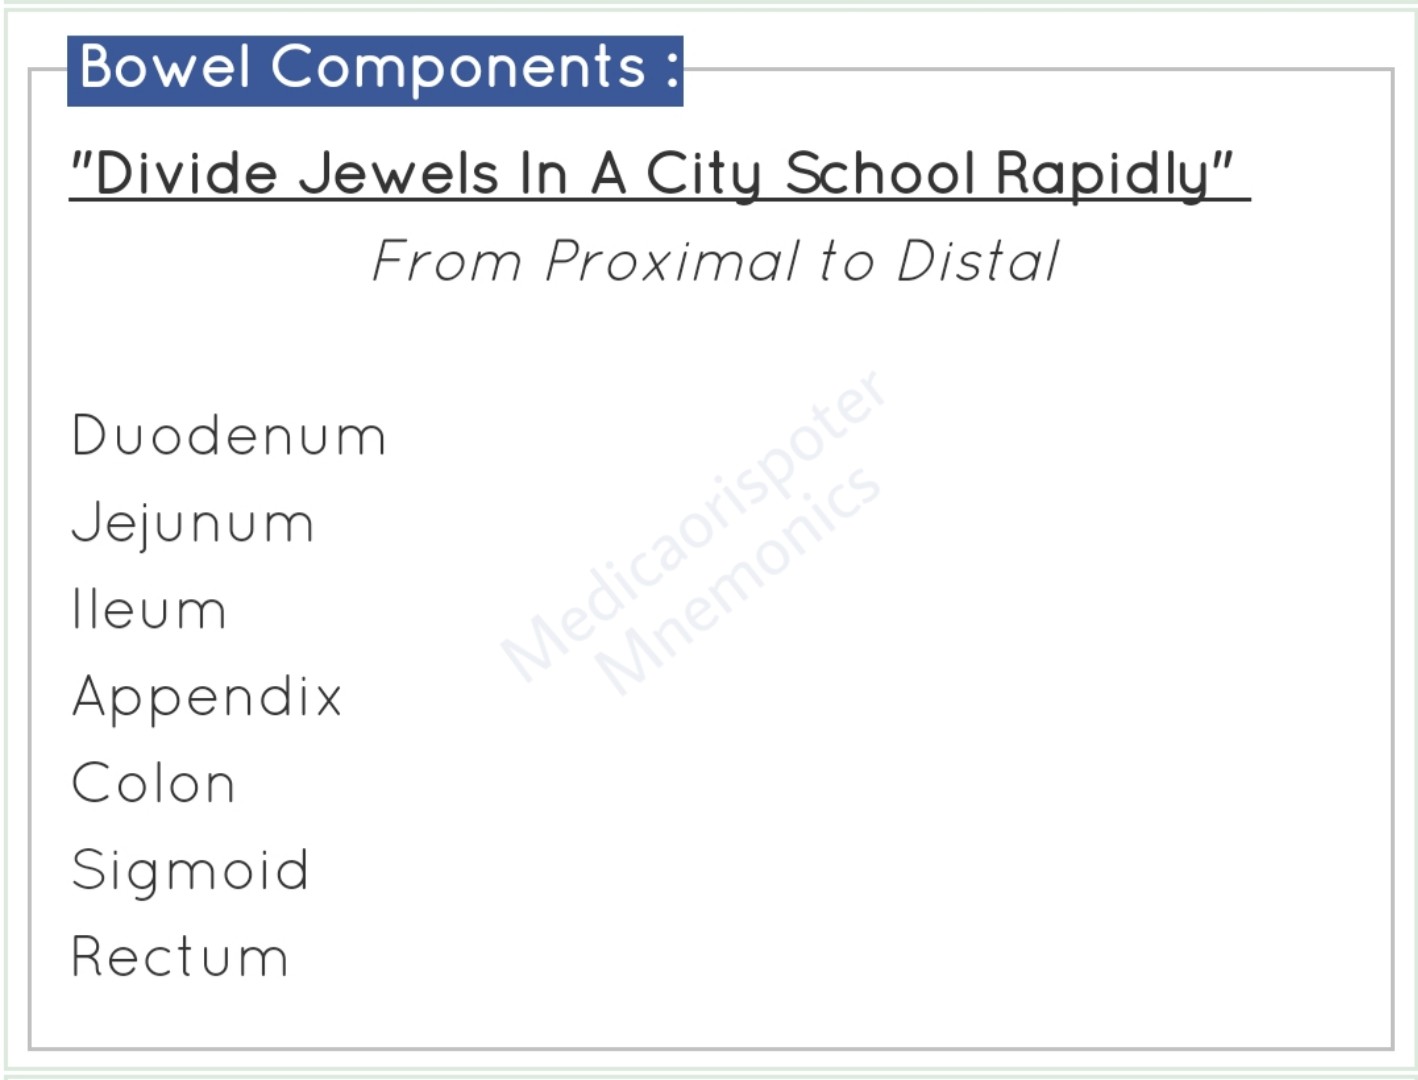 Components of Bowel